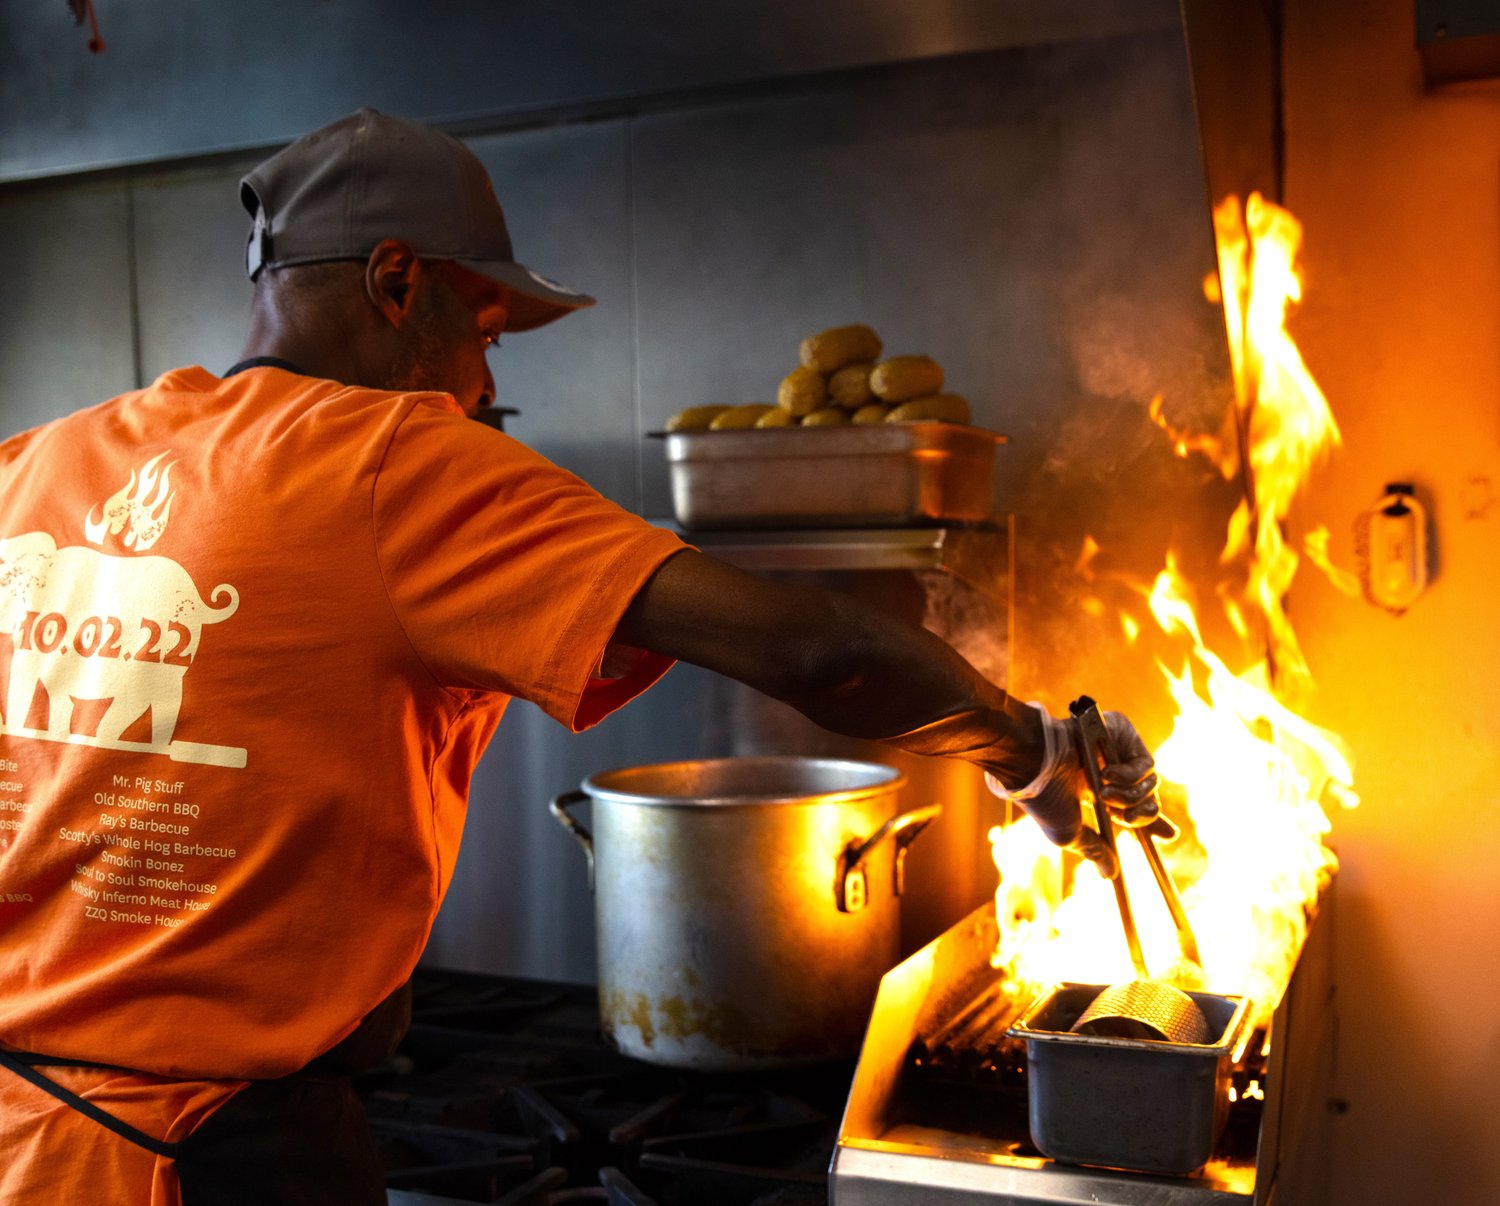 A man in an orange shirt, baseball cap and apron reaching tongs into a flaming pan.